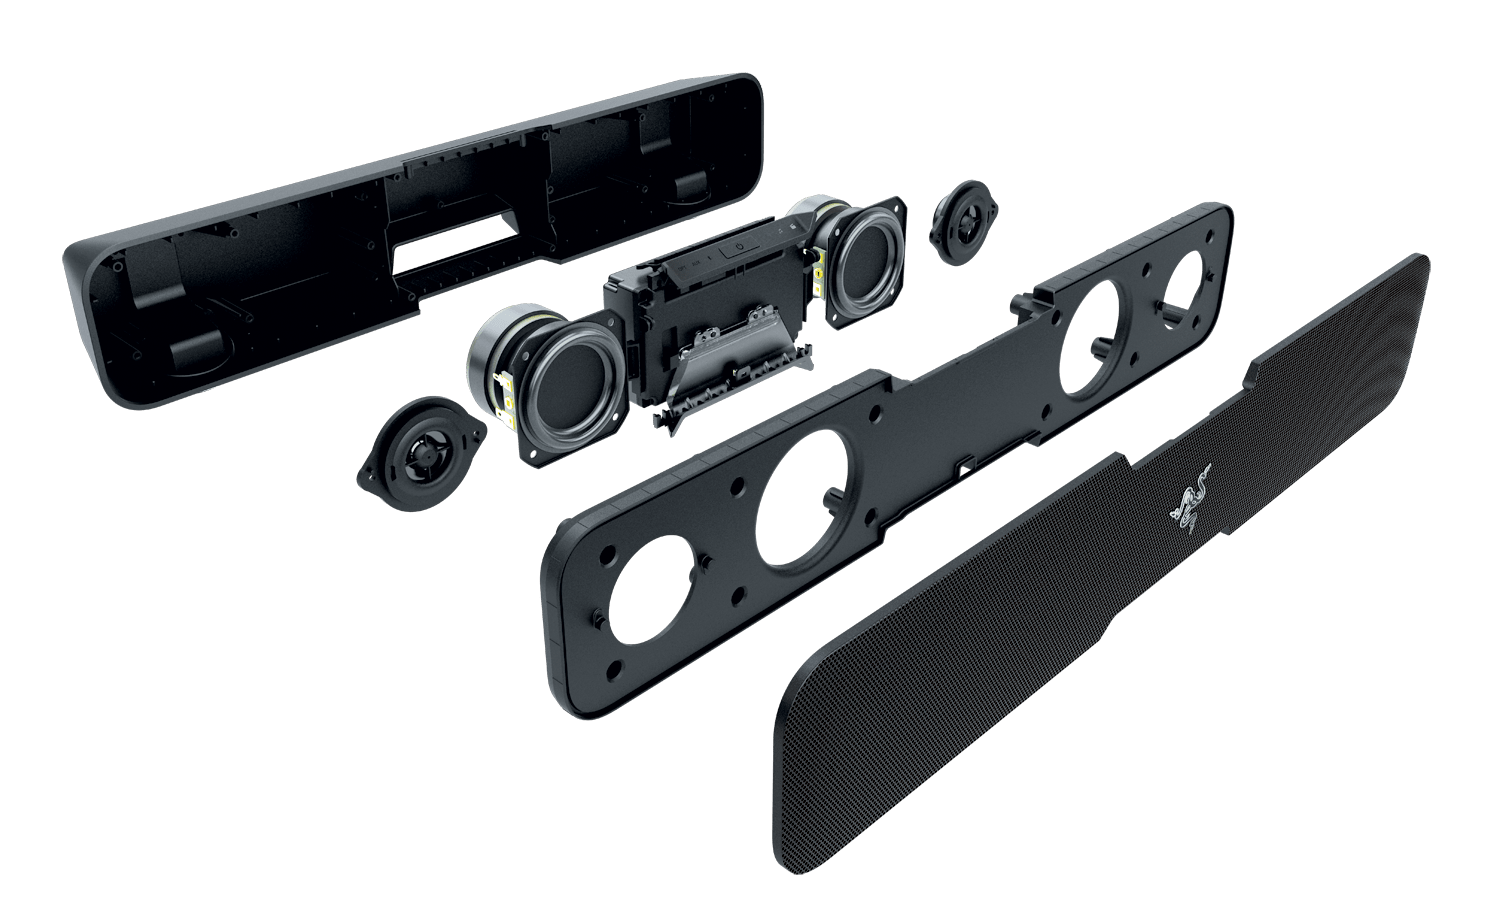 Razer Leviathan 5.1 Channel Surround Sound Bar: The Kotaku Review